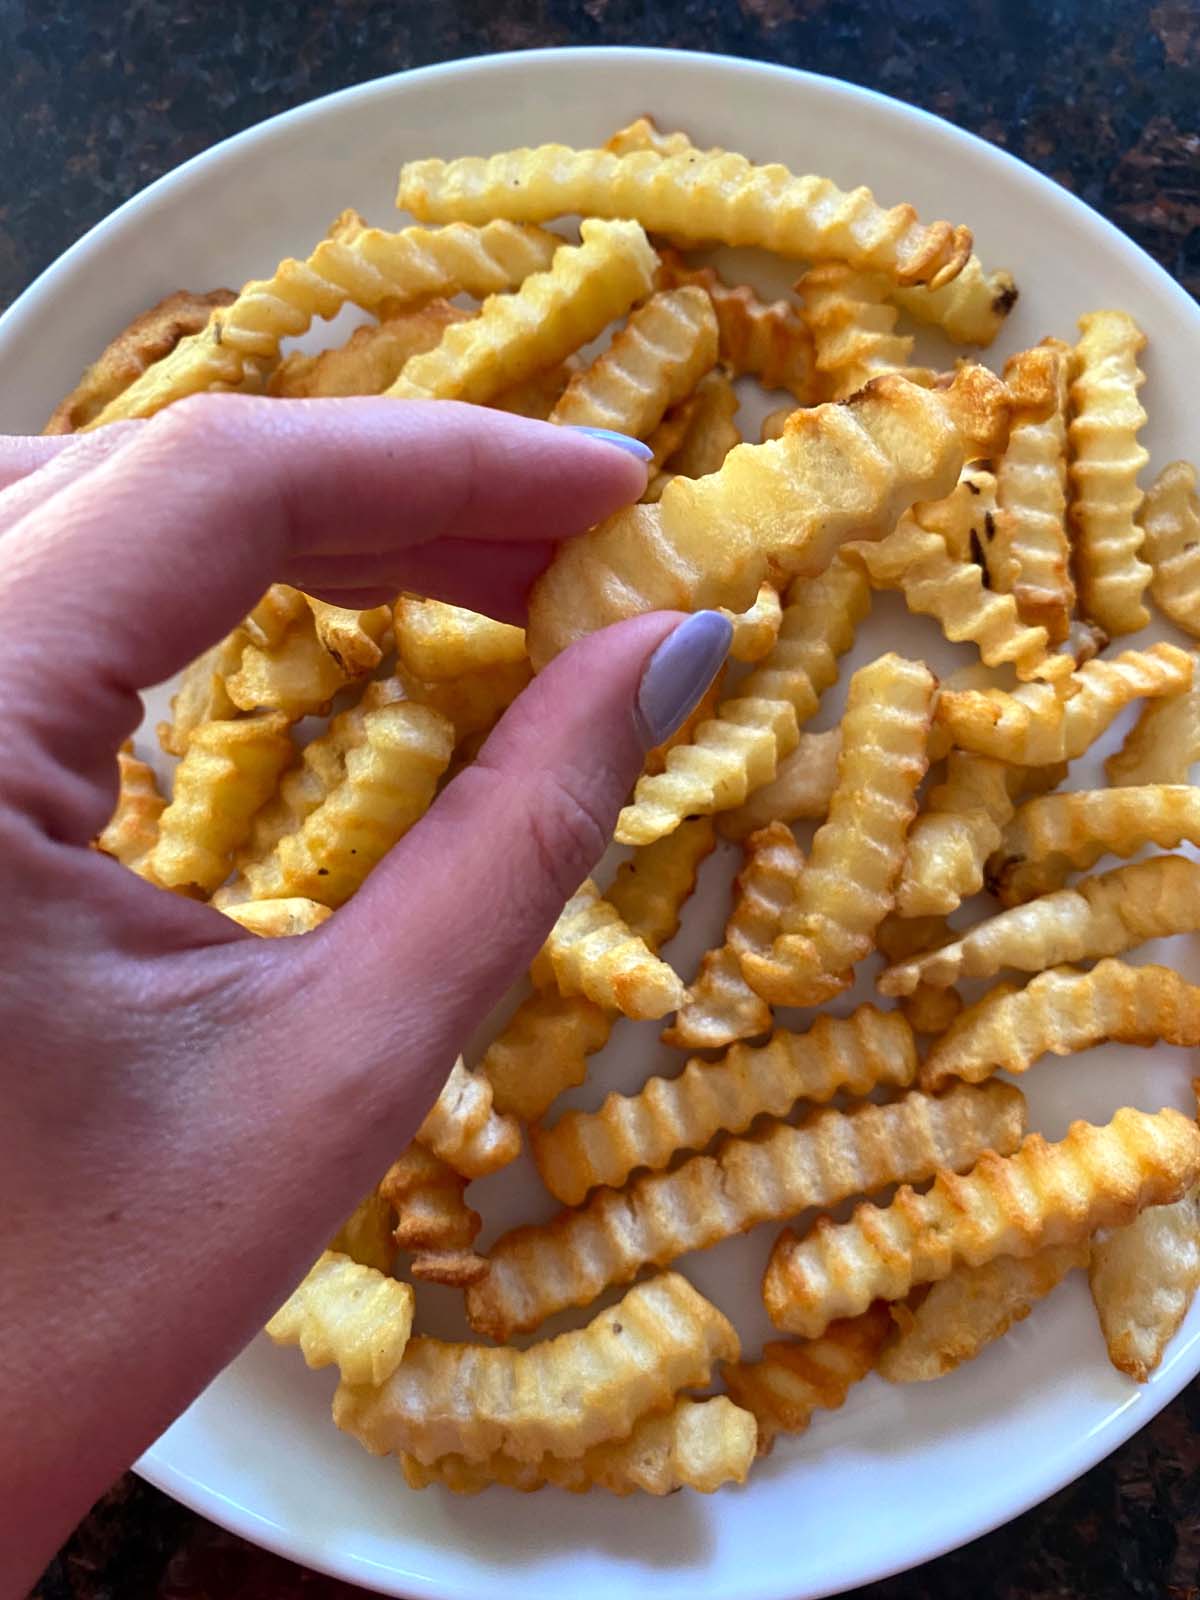 Air Fryer Frozen Crinkle Fries-So Crispy!